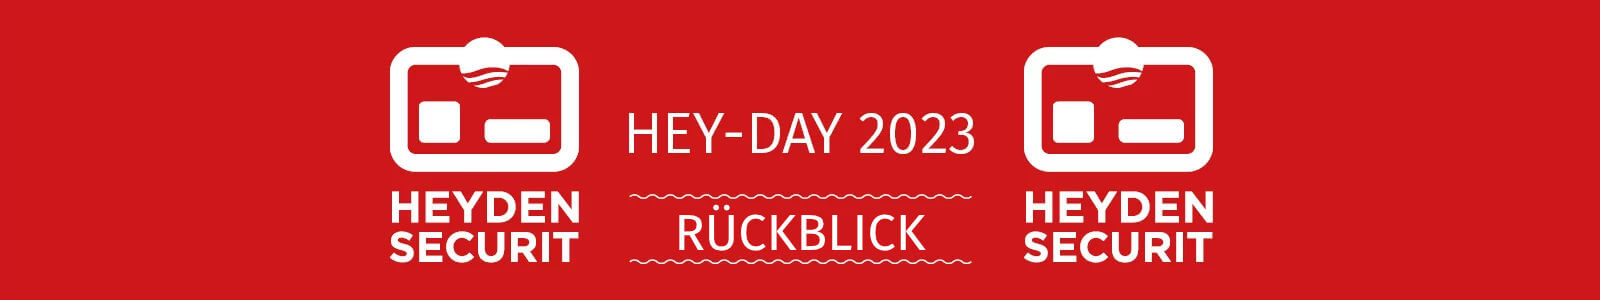 Hey-Day 2023 Rückblick Headerbild